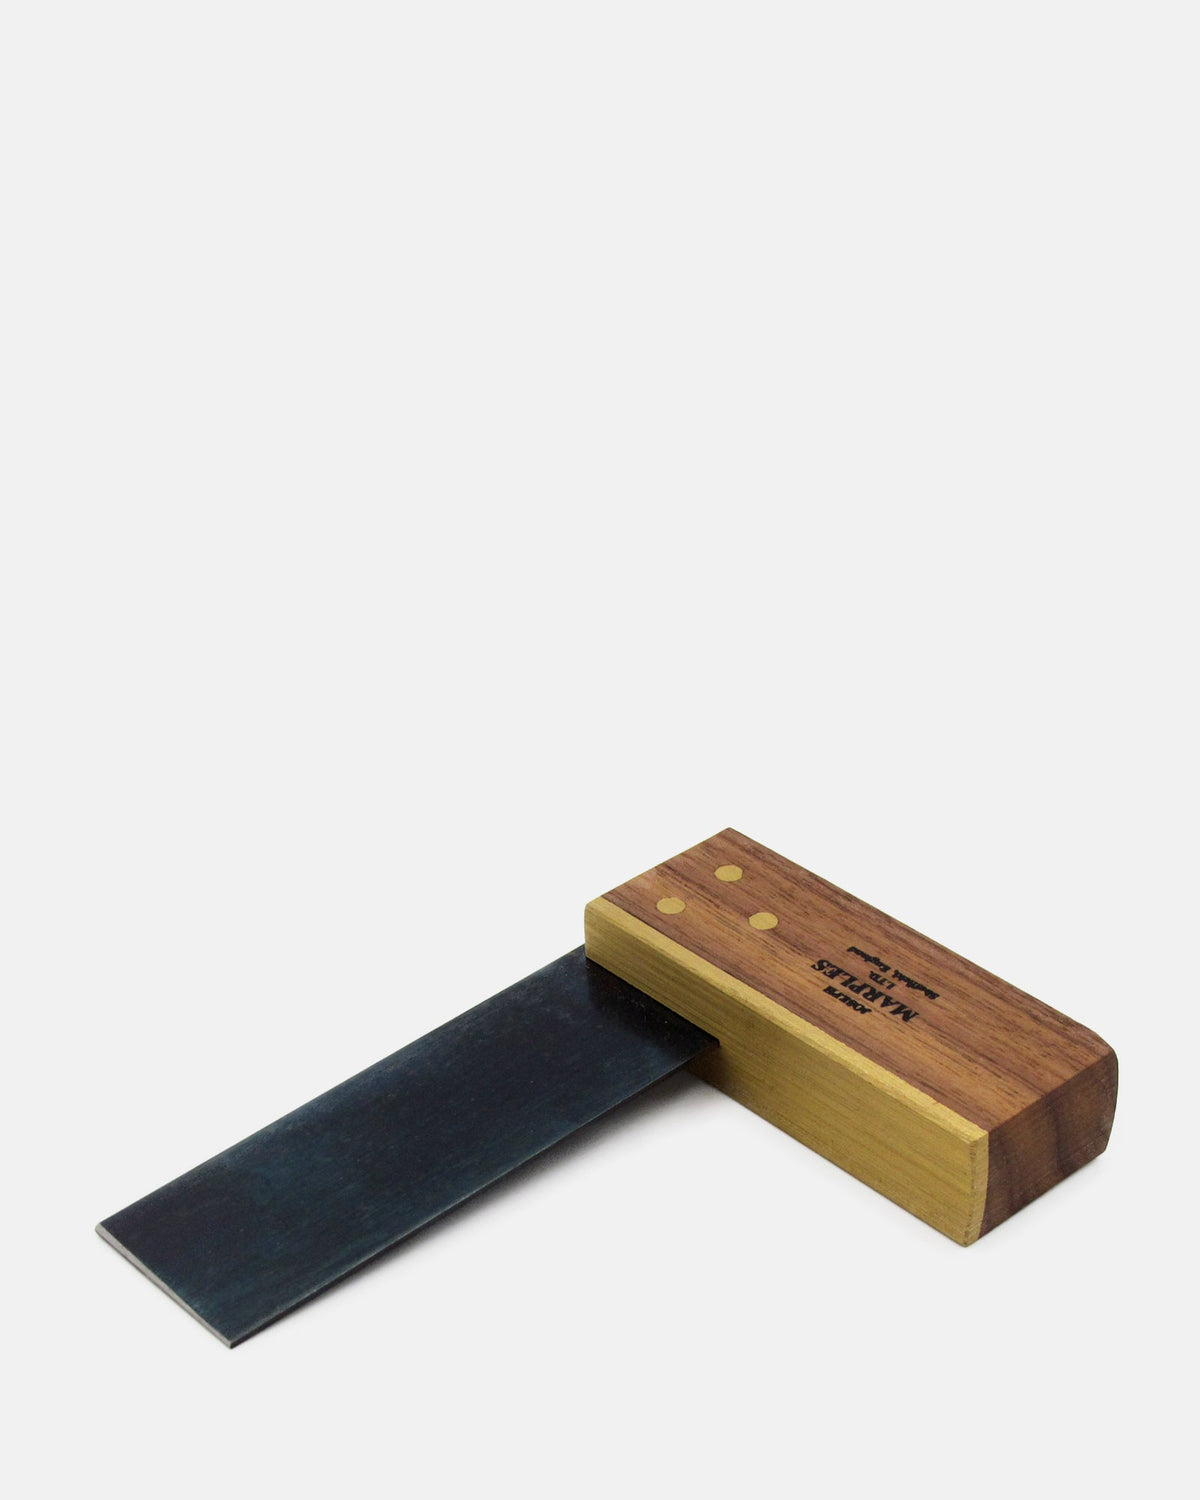 Miniature Try Square 3 inch - BRIT LOCKER